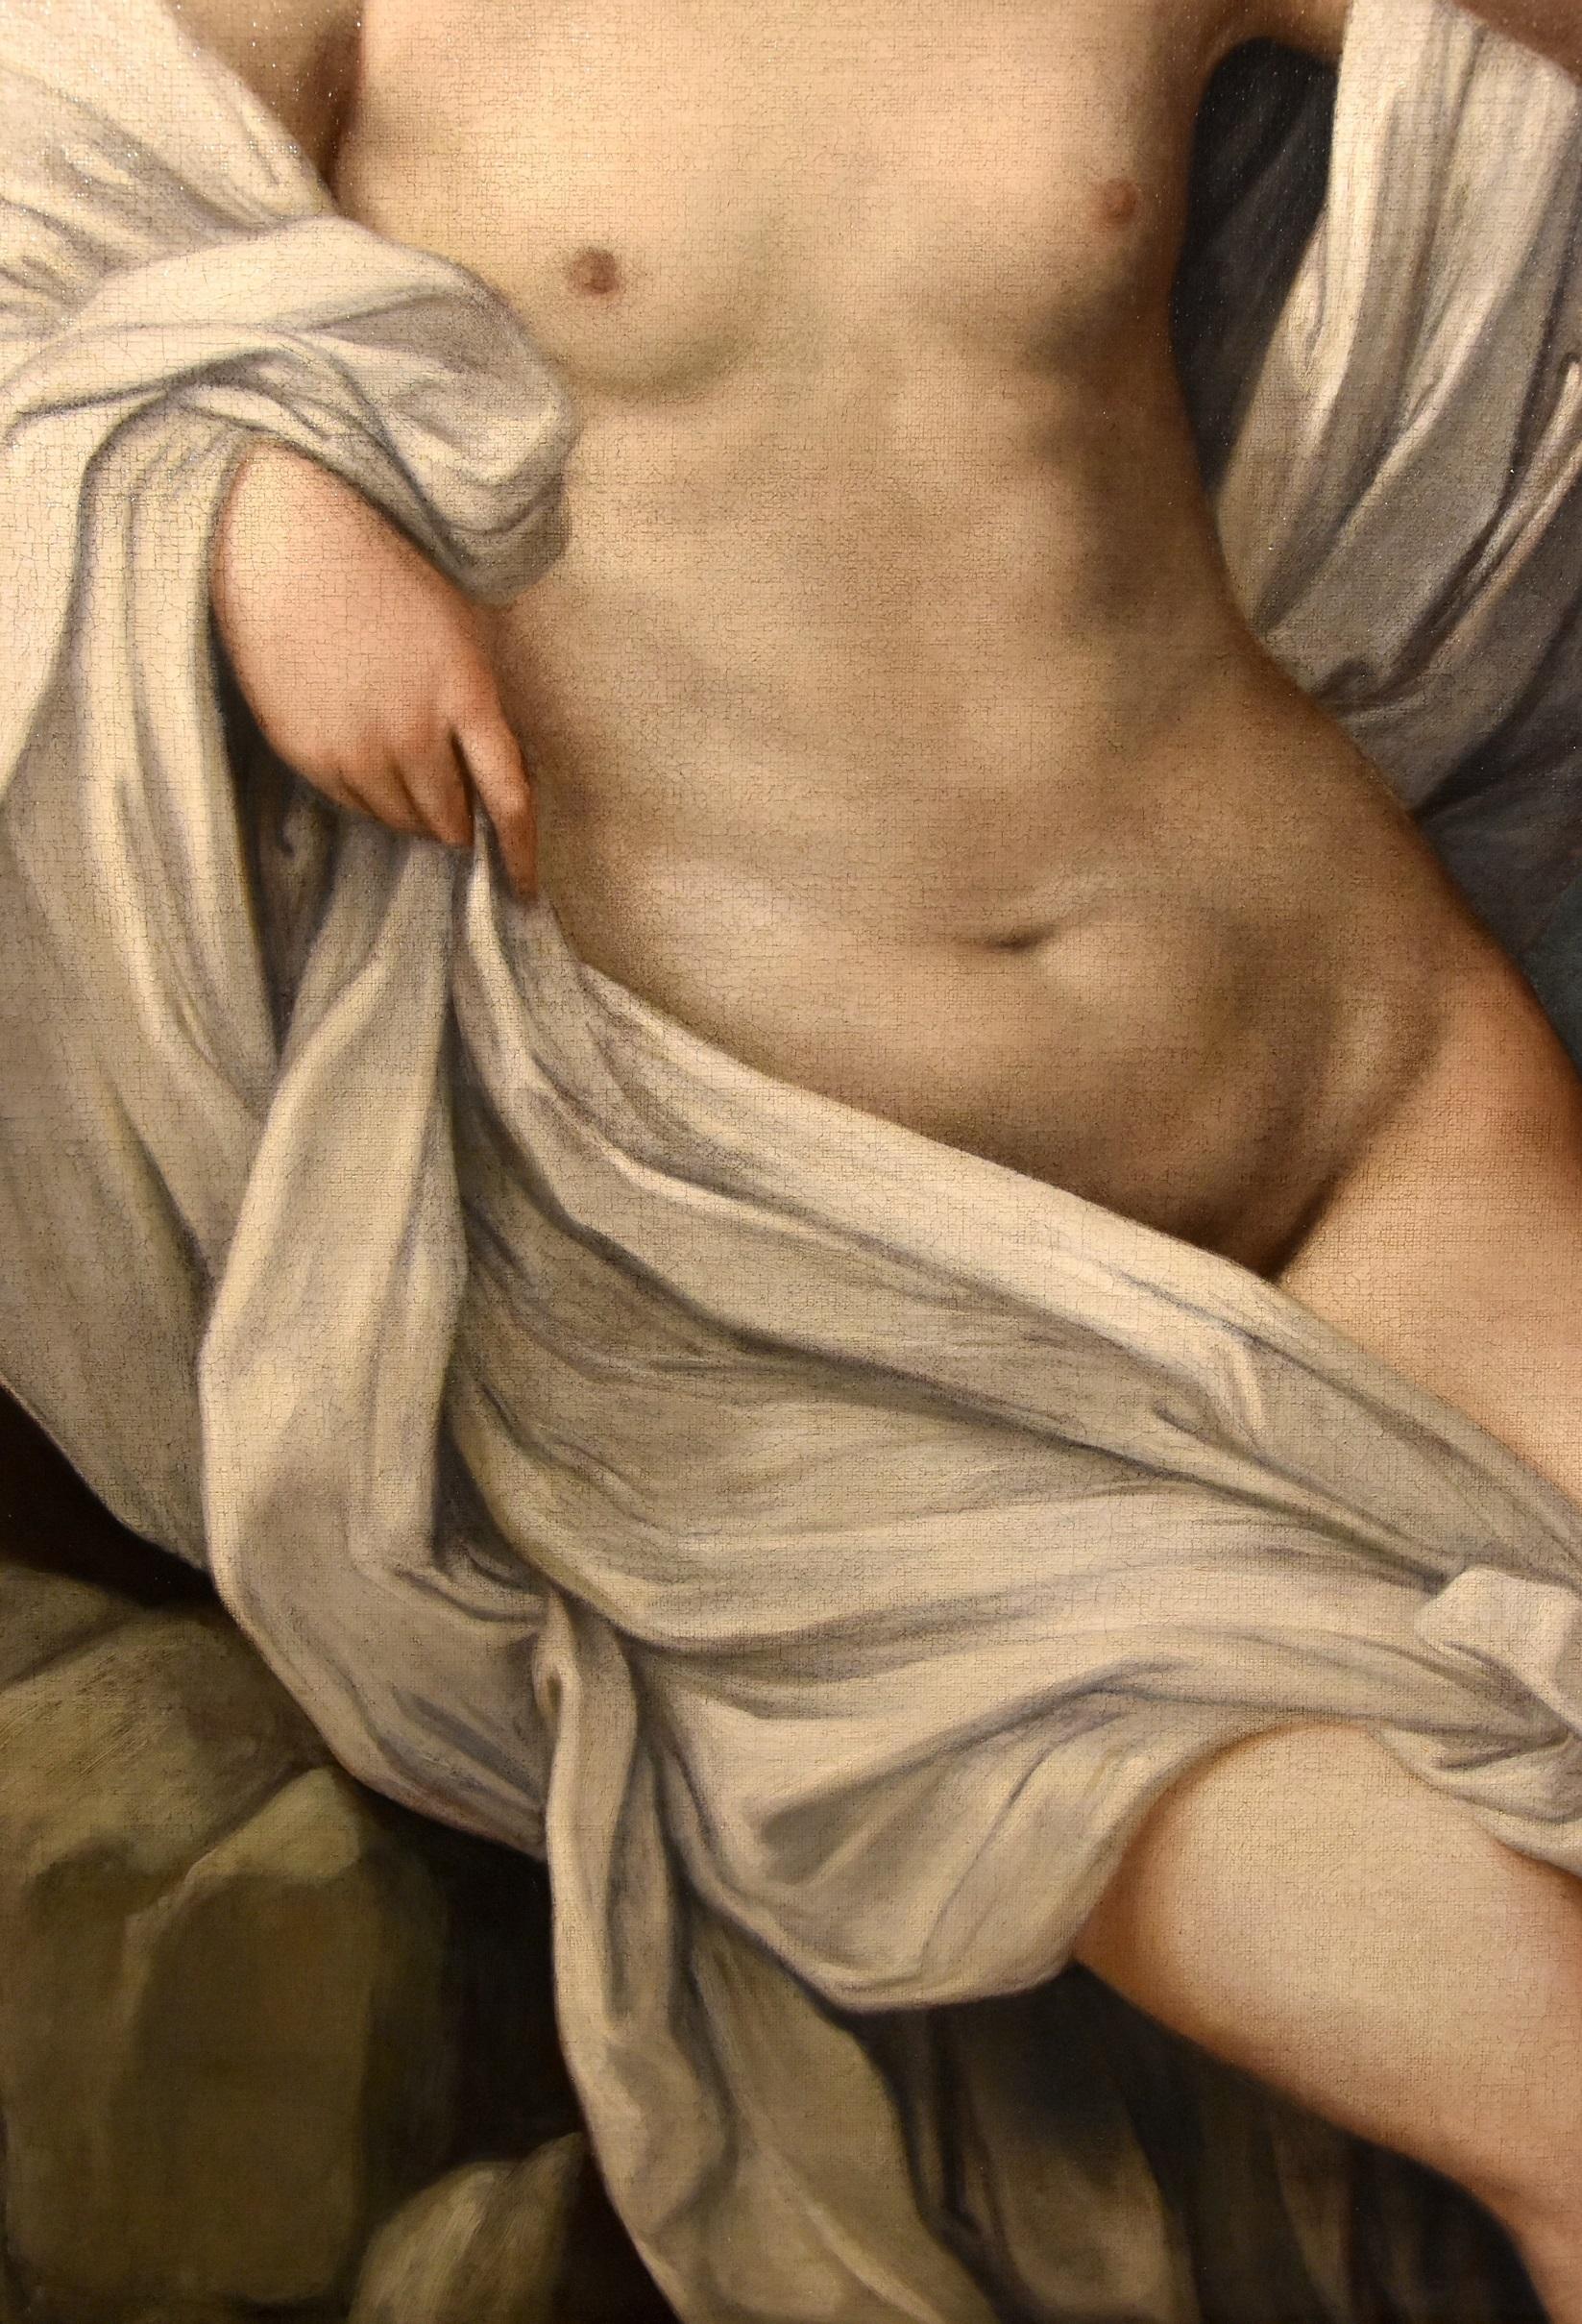 Princess Ariadne Guido Reni Paint Oil on canvas Old master 17th Century Italian 12